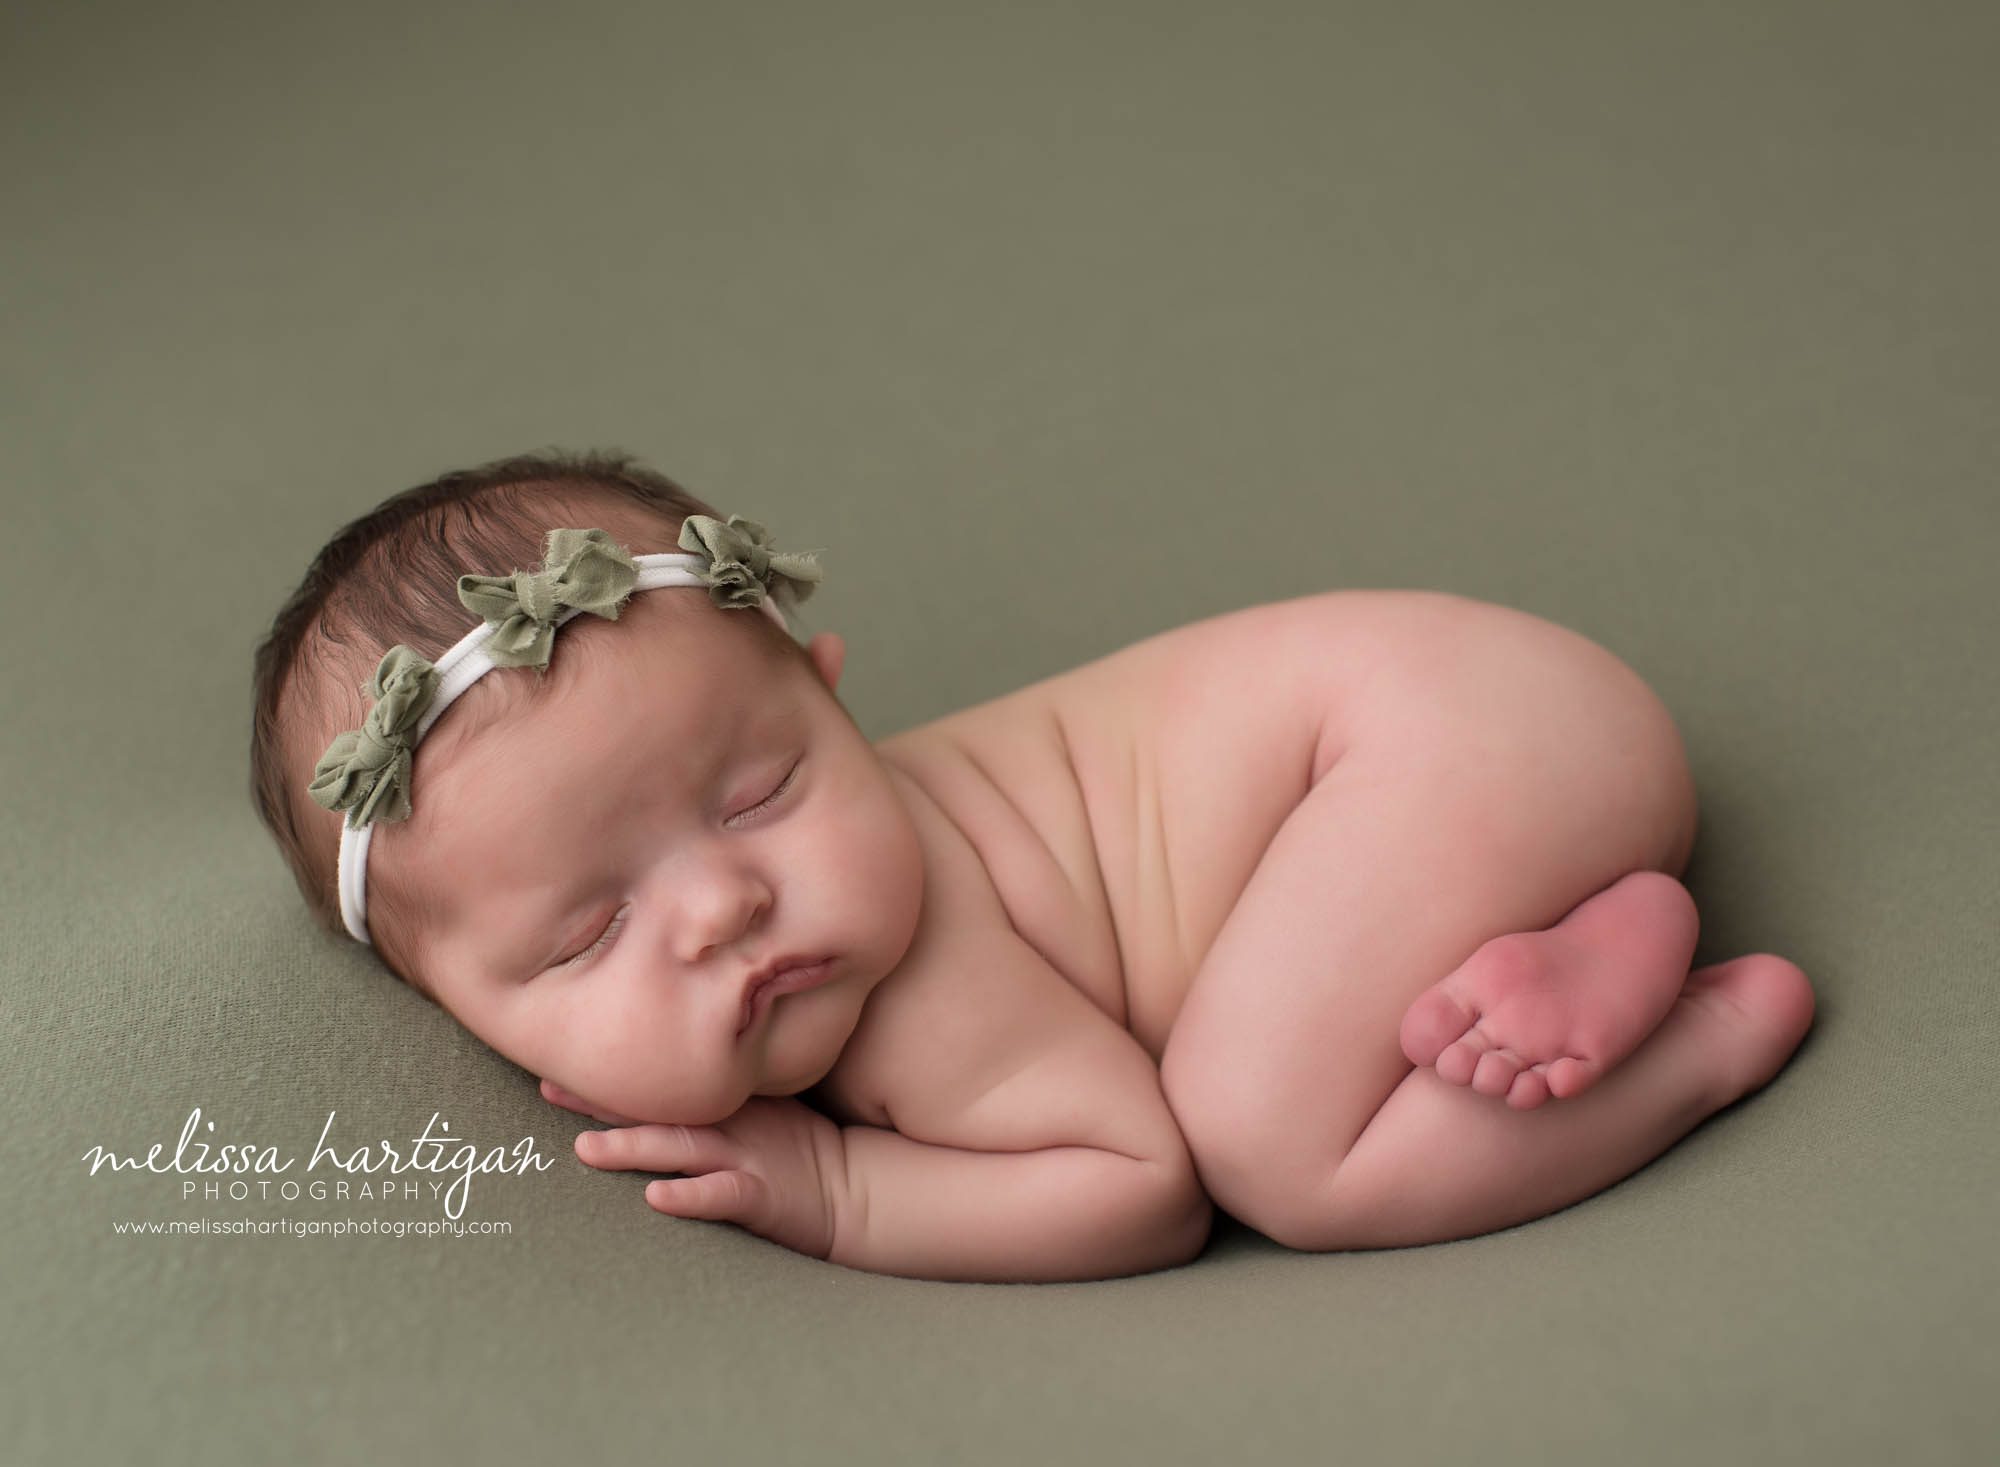 newborn baby girl posed on green backdrop wearing green bow headband